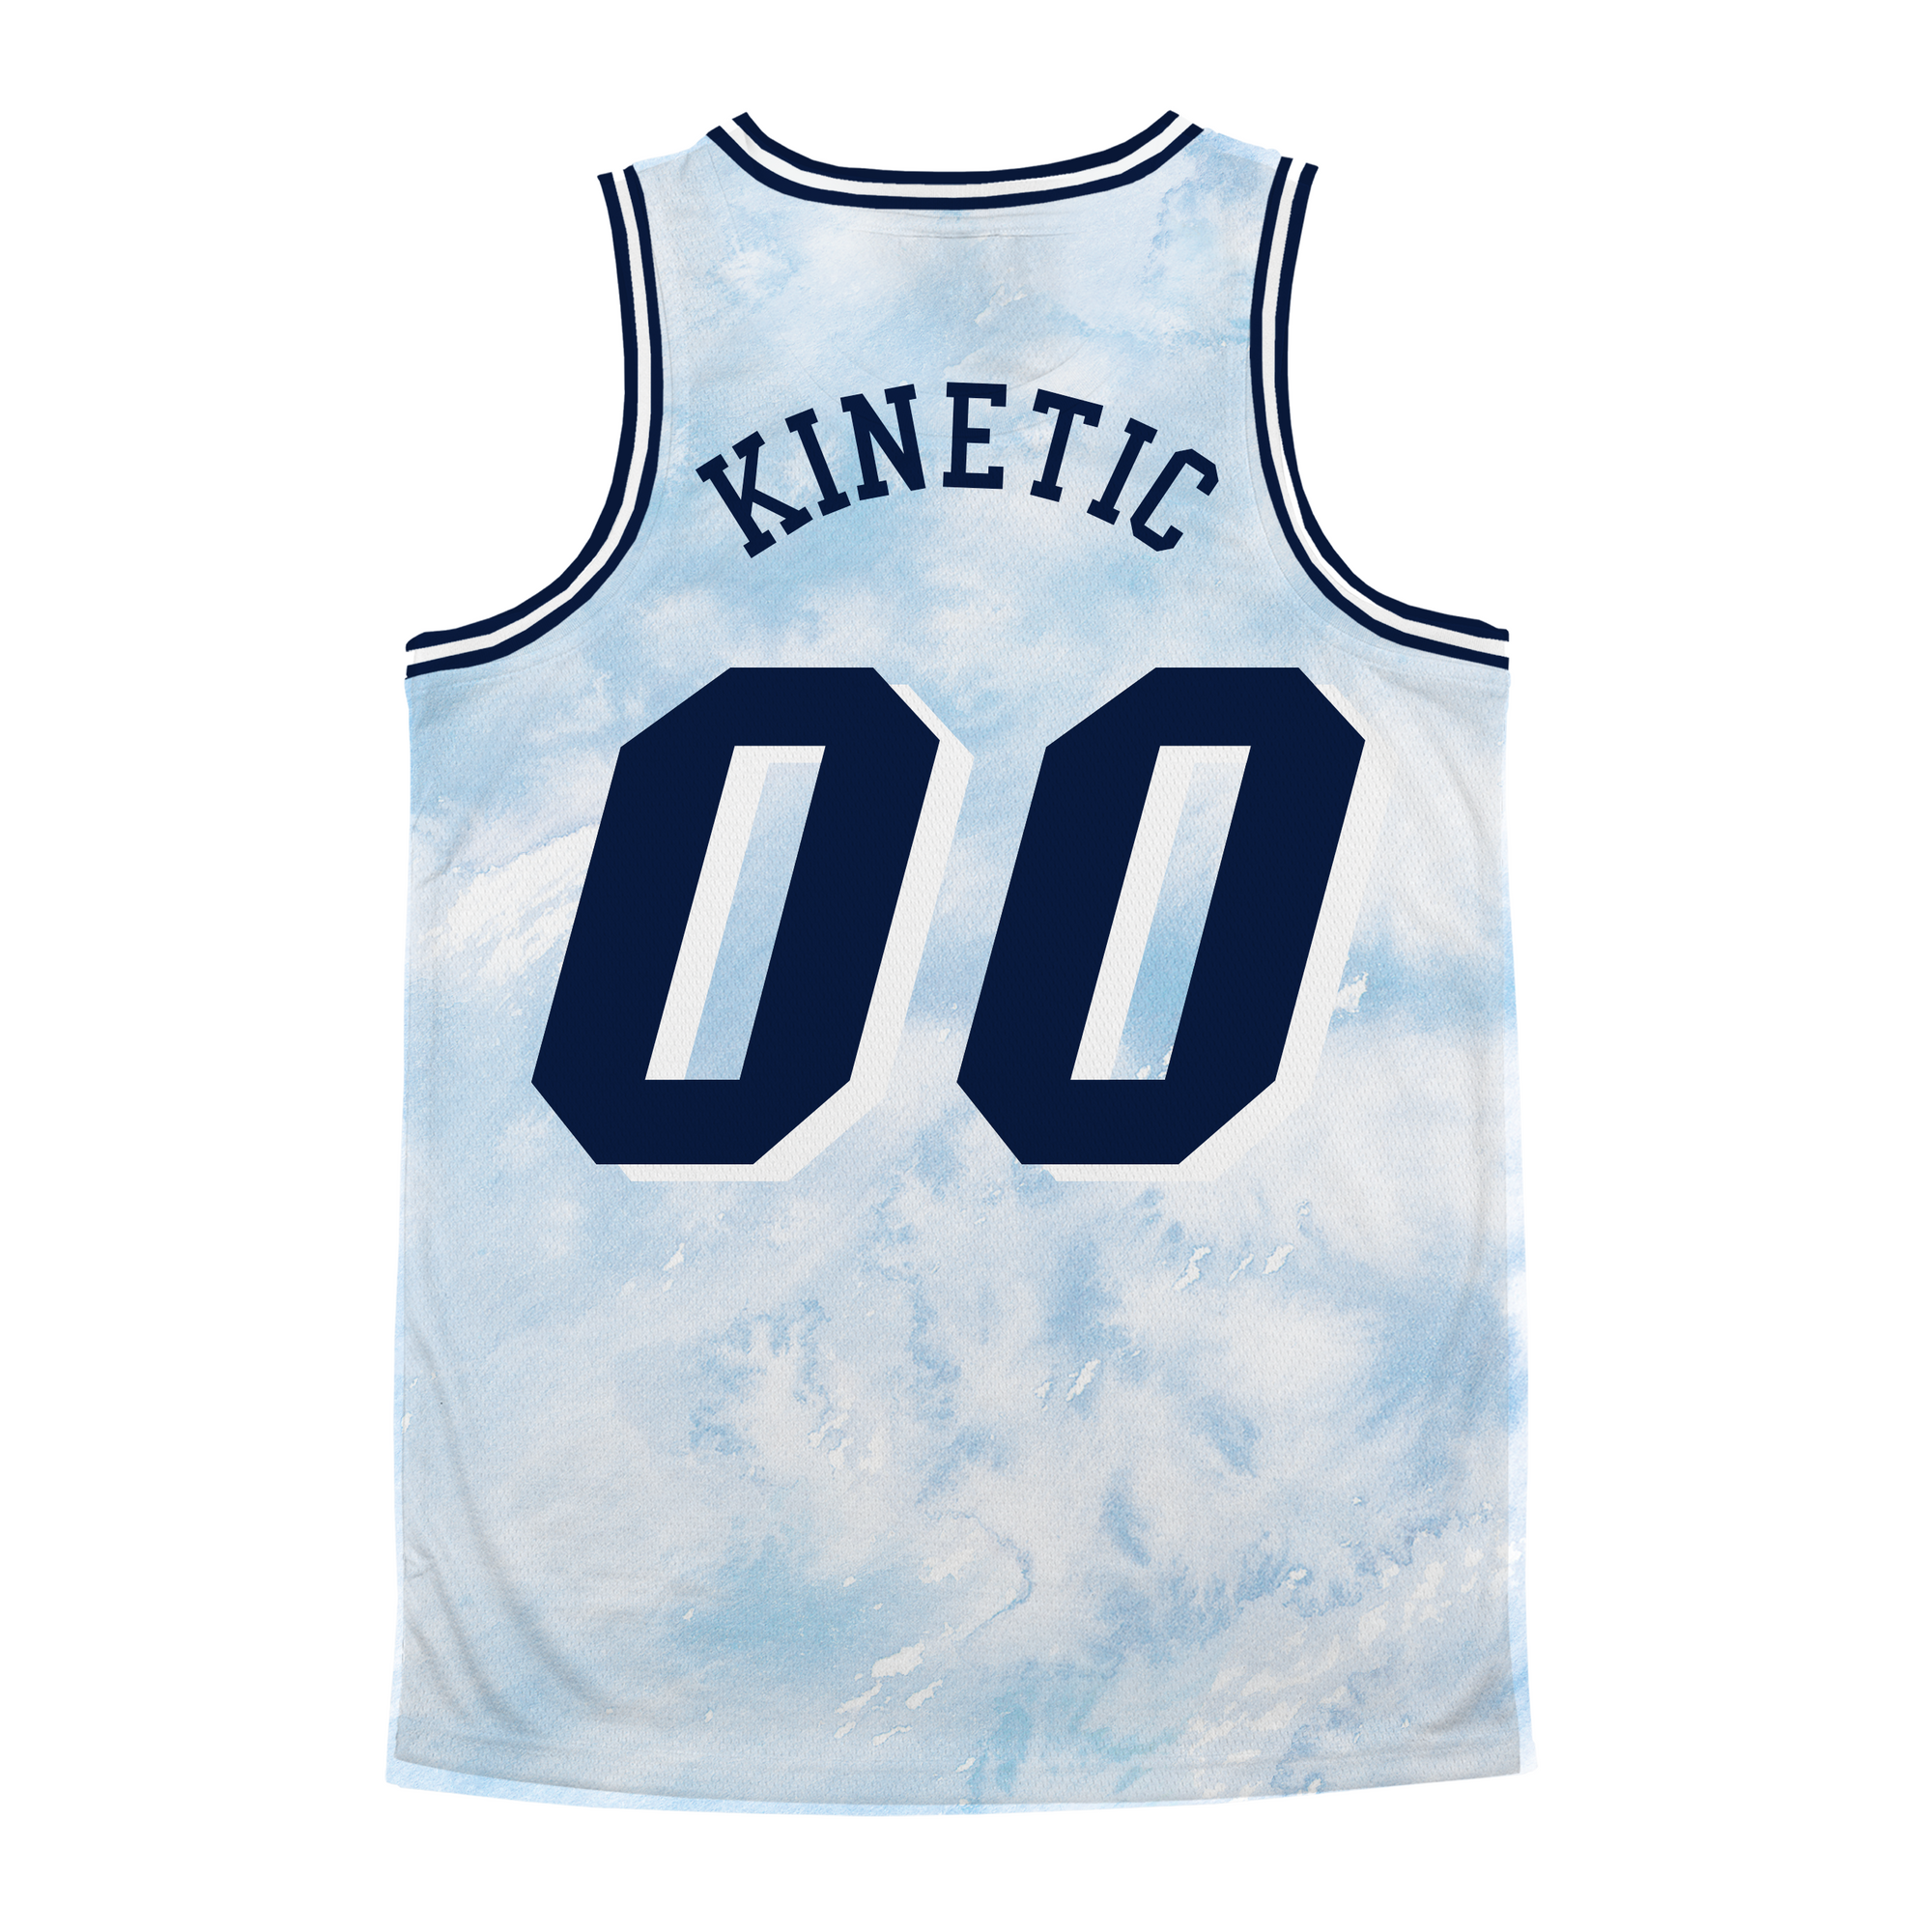 Phi Kappa Tau - Blue Sky Basketball Jersey